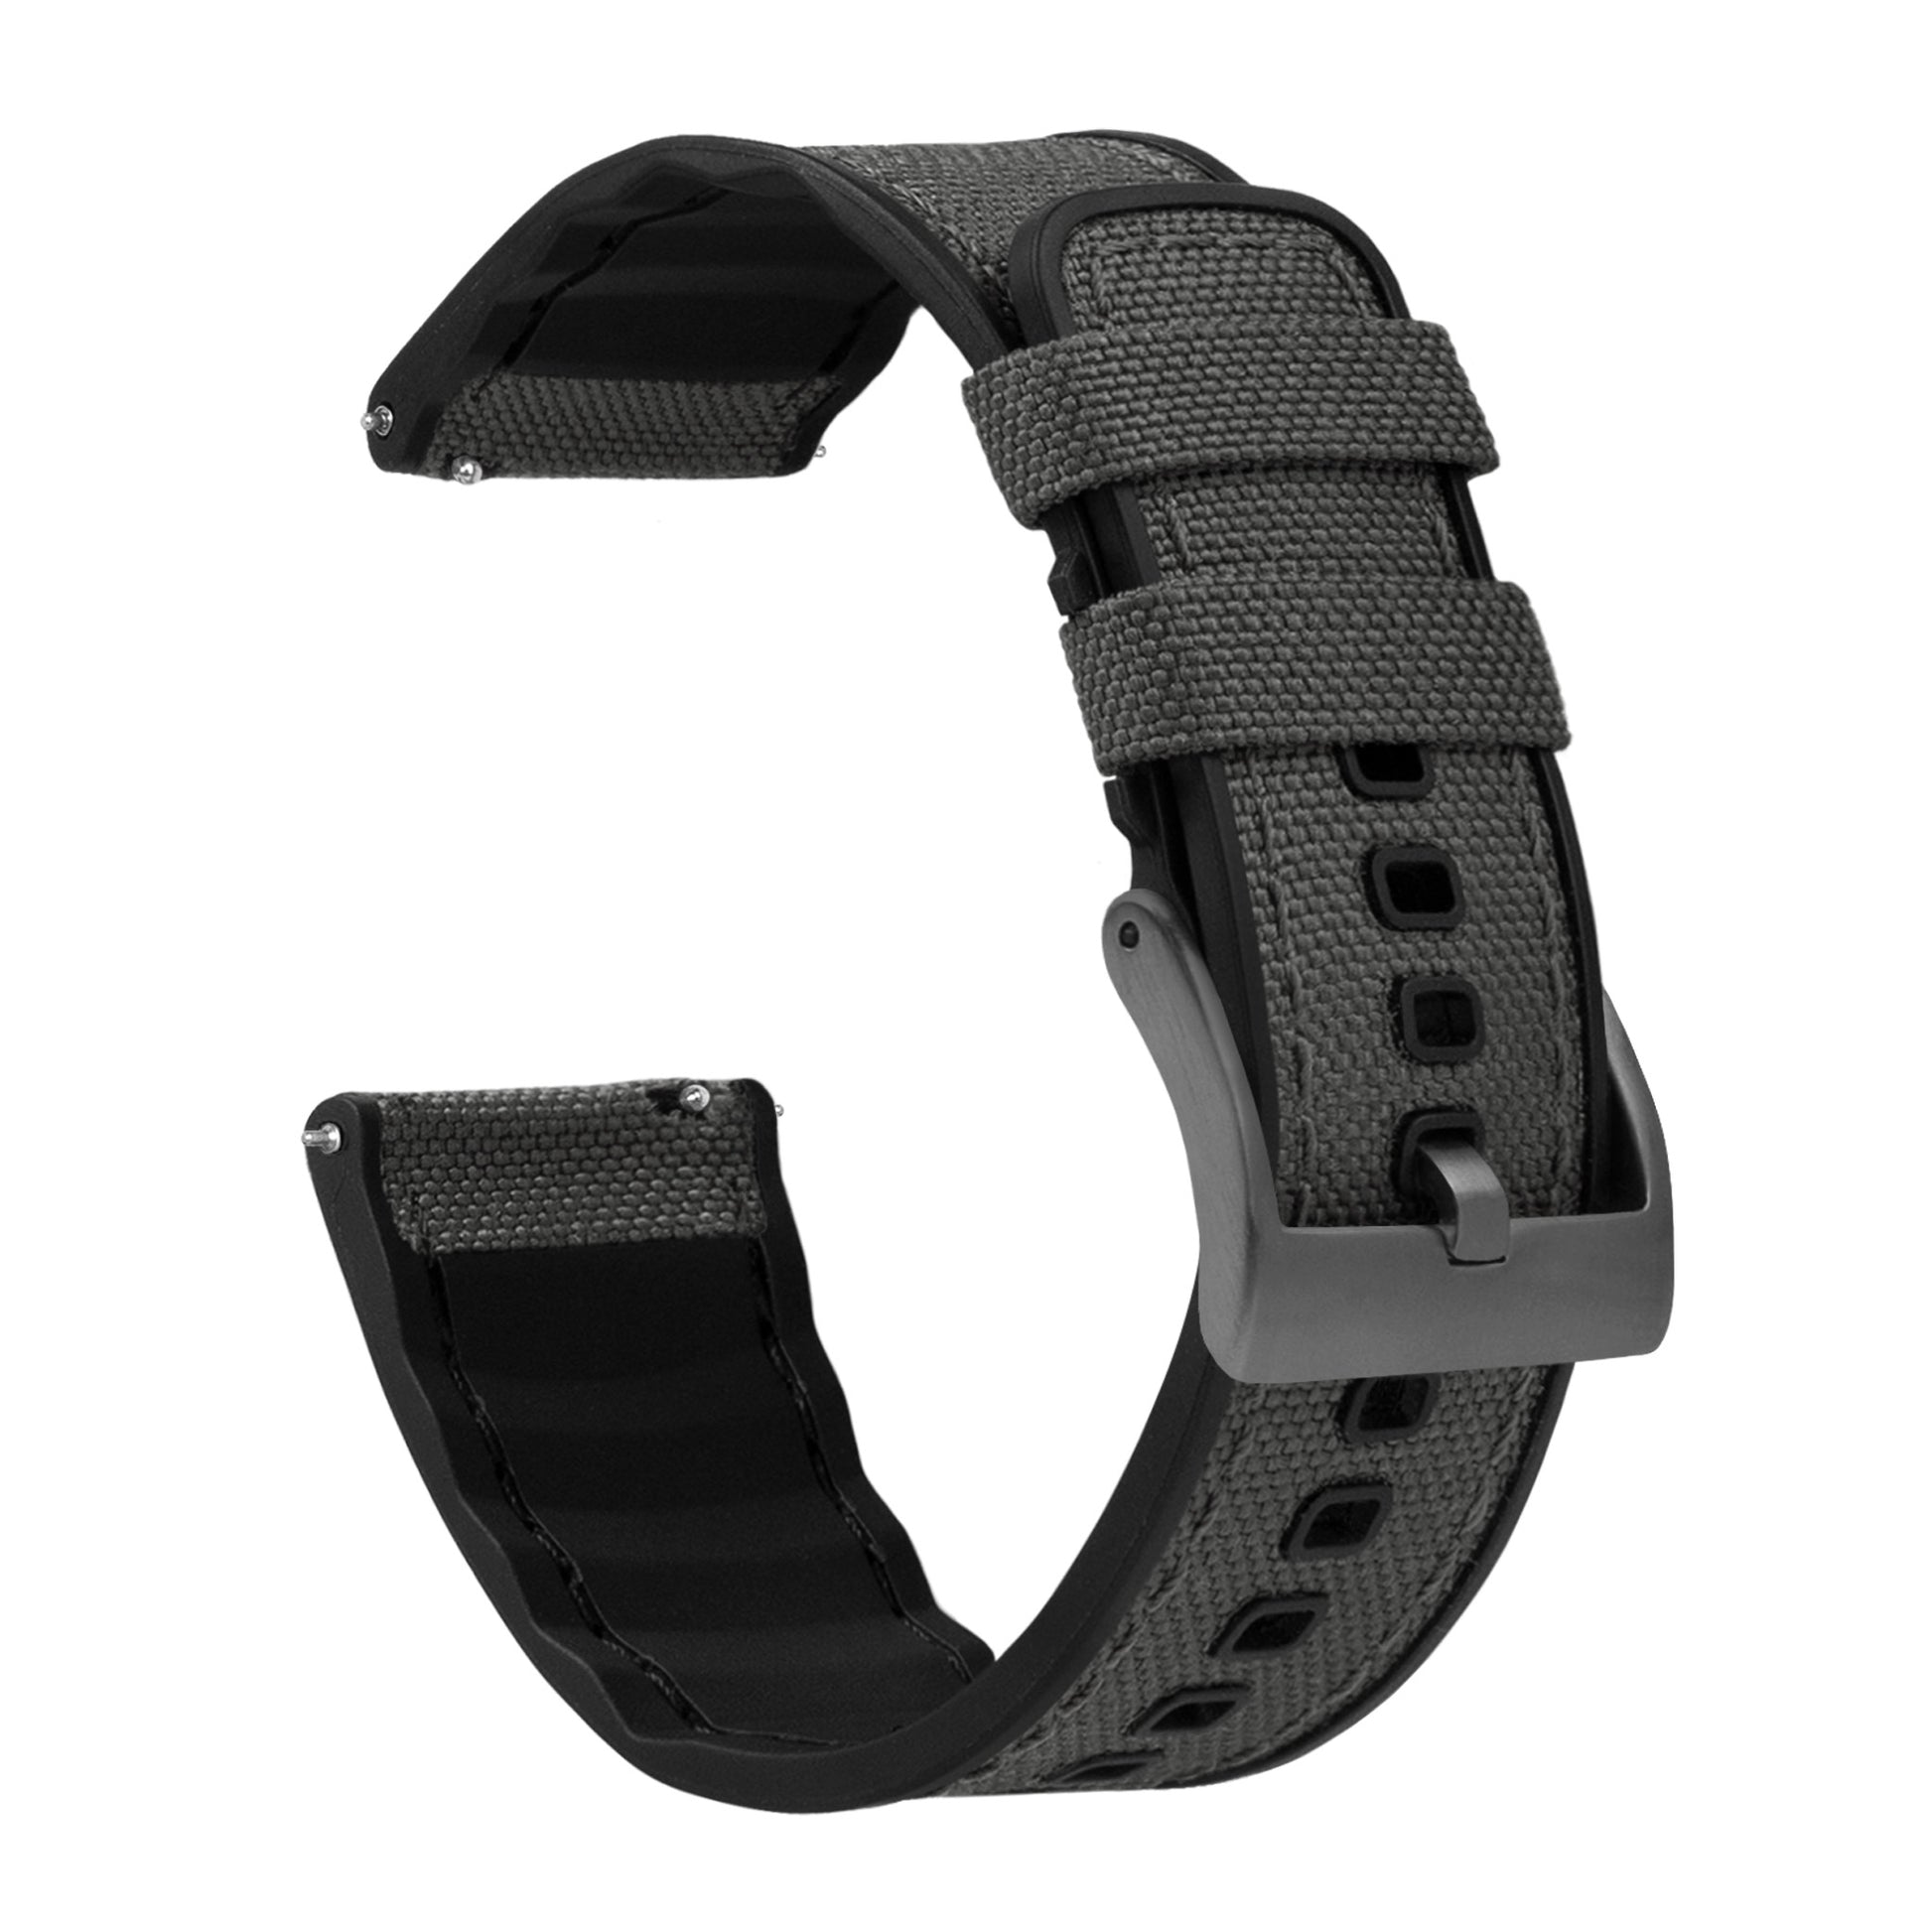 Smoke Grey Cordura Fabric and Silicone Hybrid - Barton Watch Bands